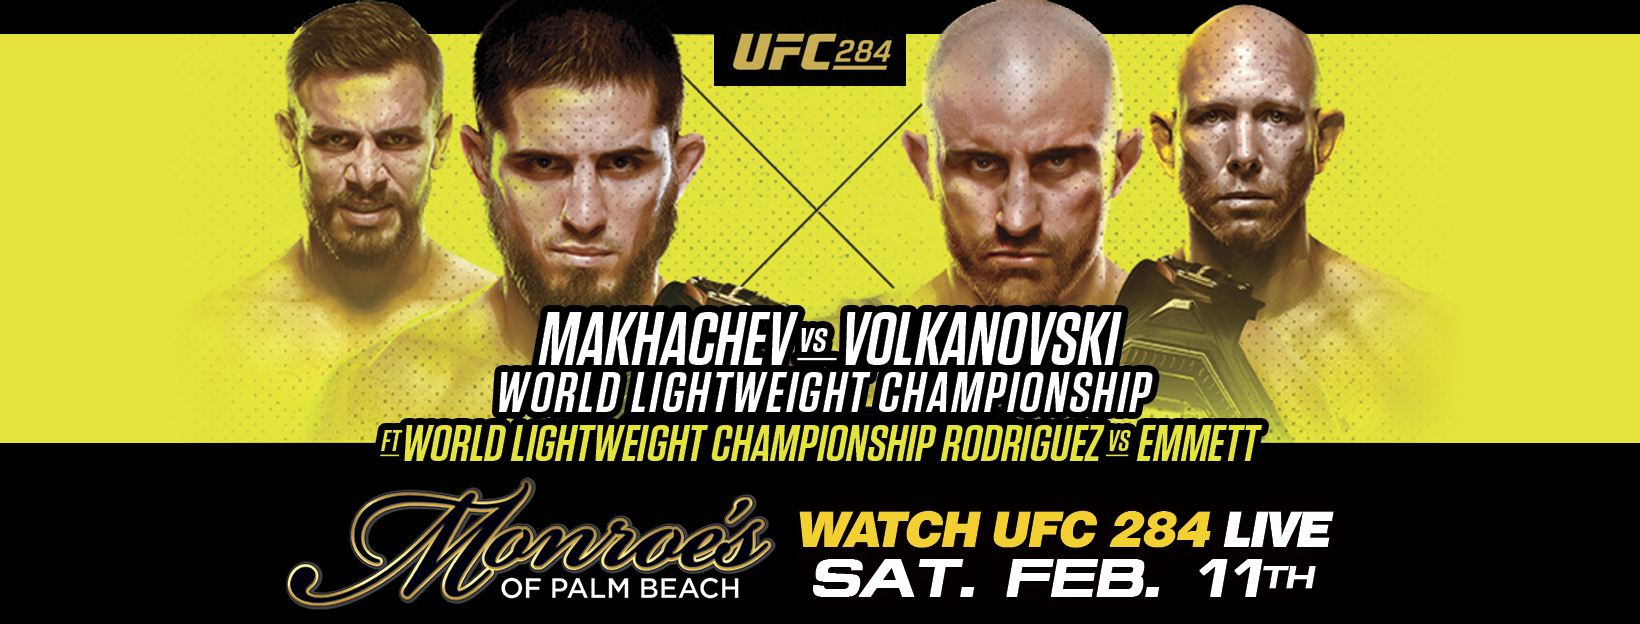 UFC 284 Live Watch Party Sat Feb 11th Monroes Palm Beach